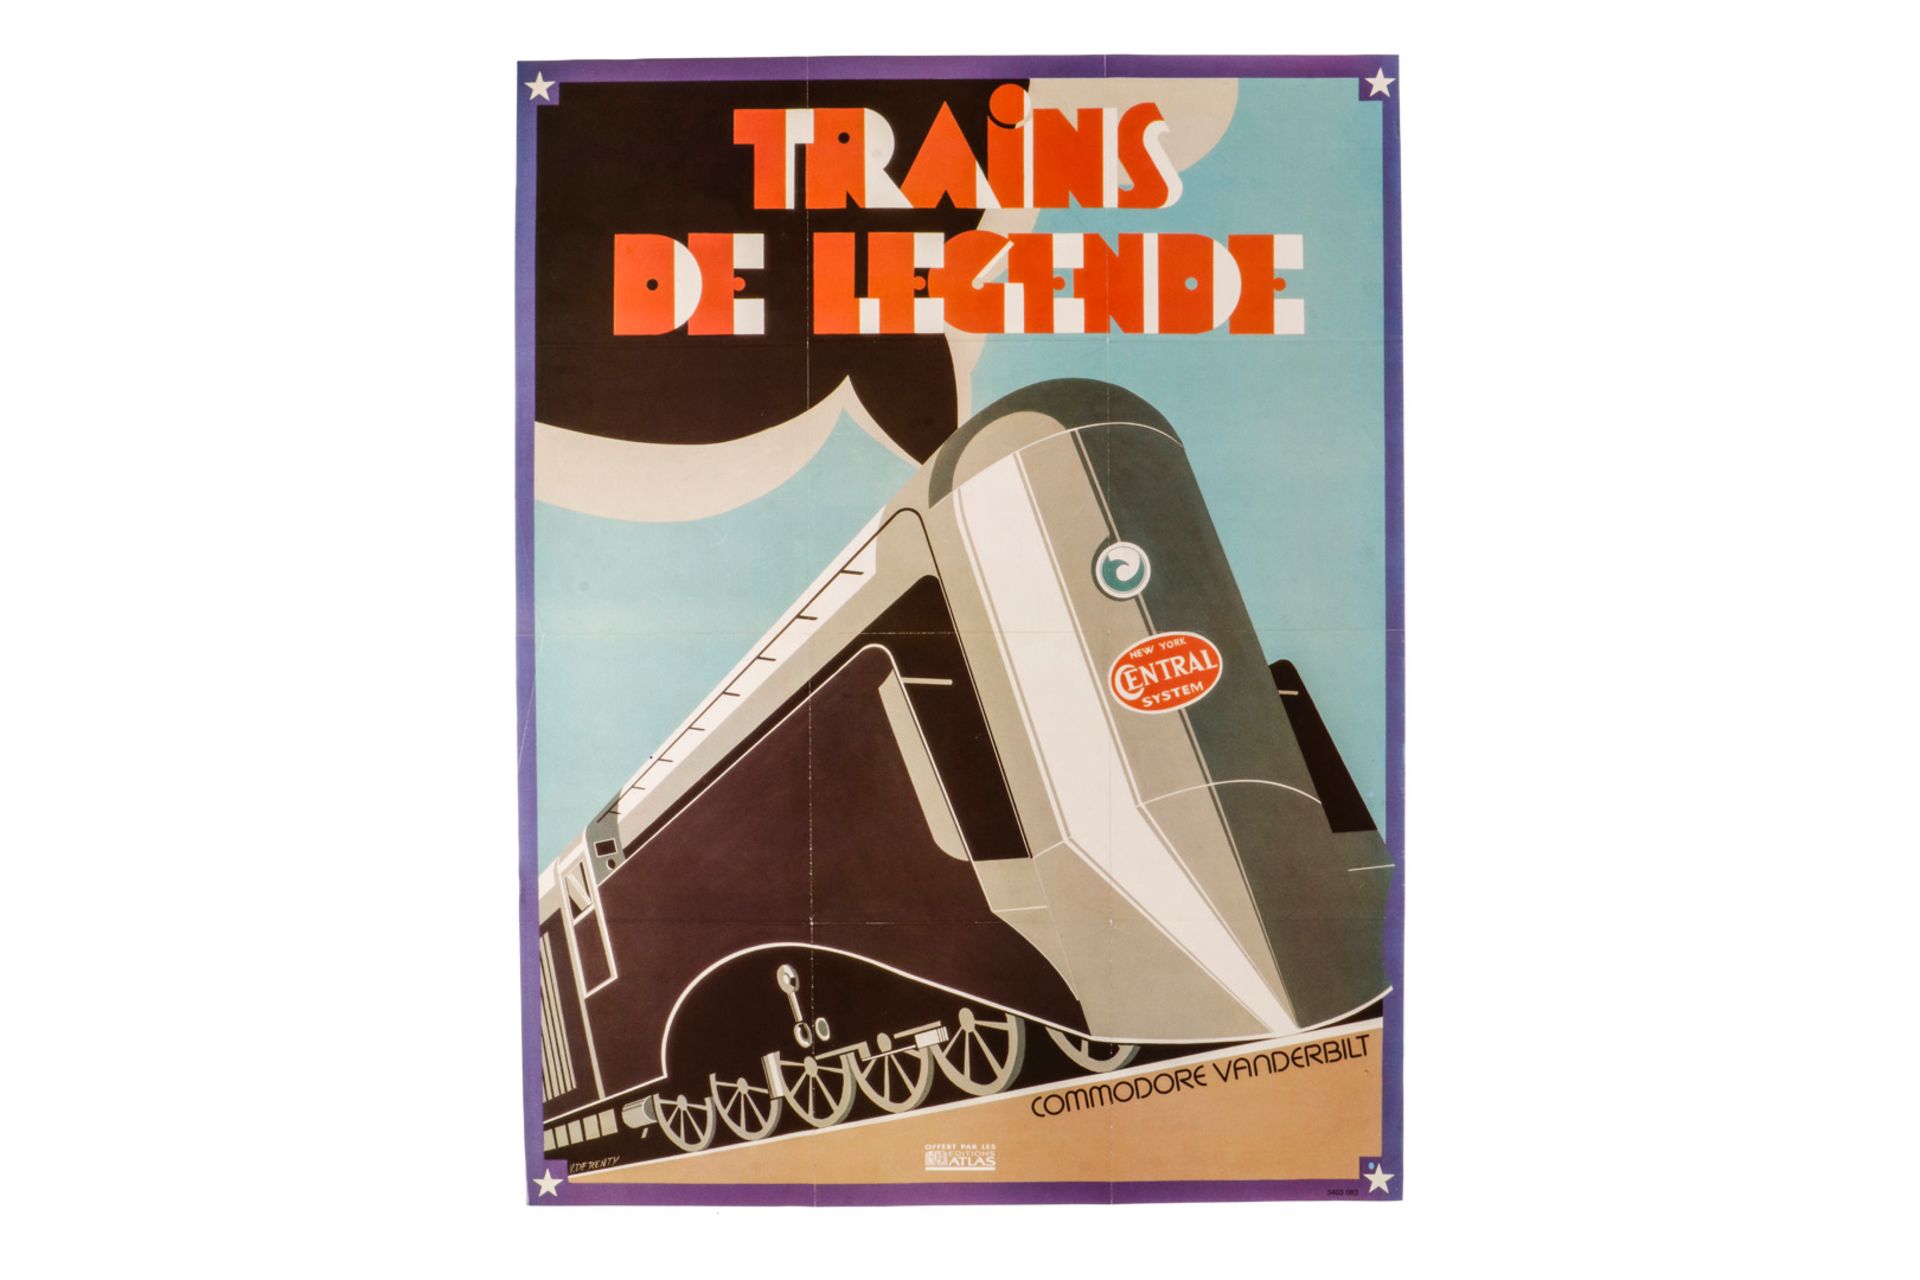 Replika Plakat Trains de Legende, Edition Atlas, Nr. 3403083, 50 x 65